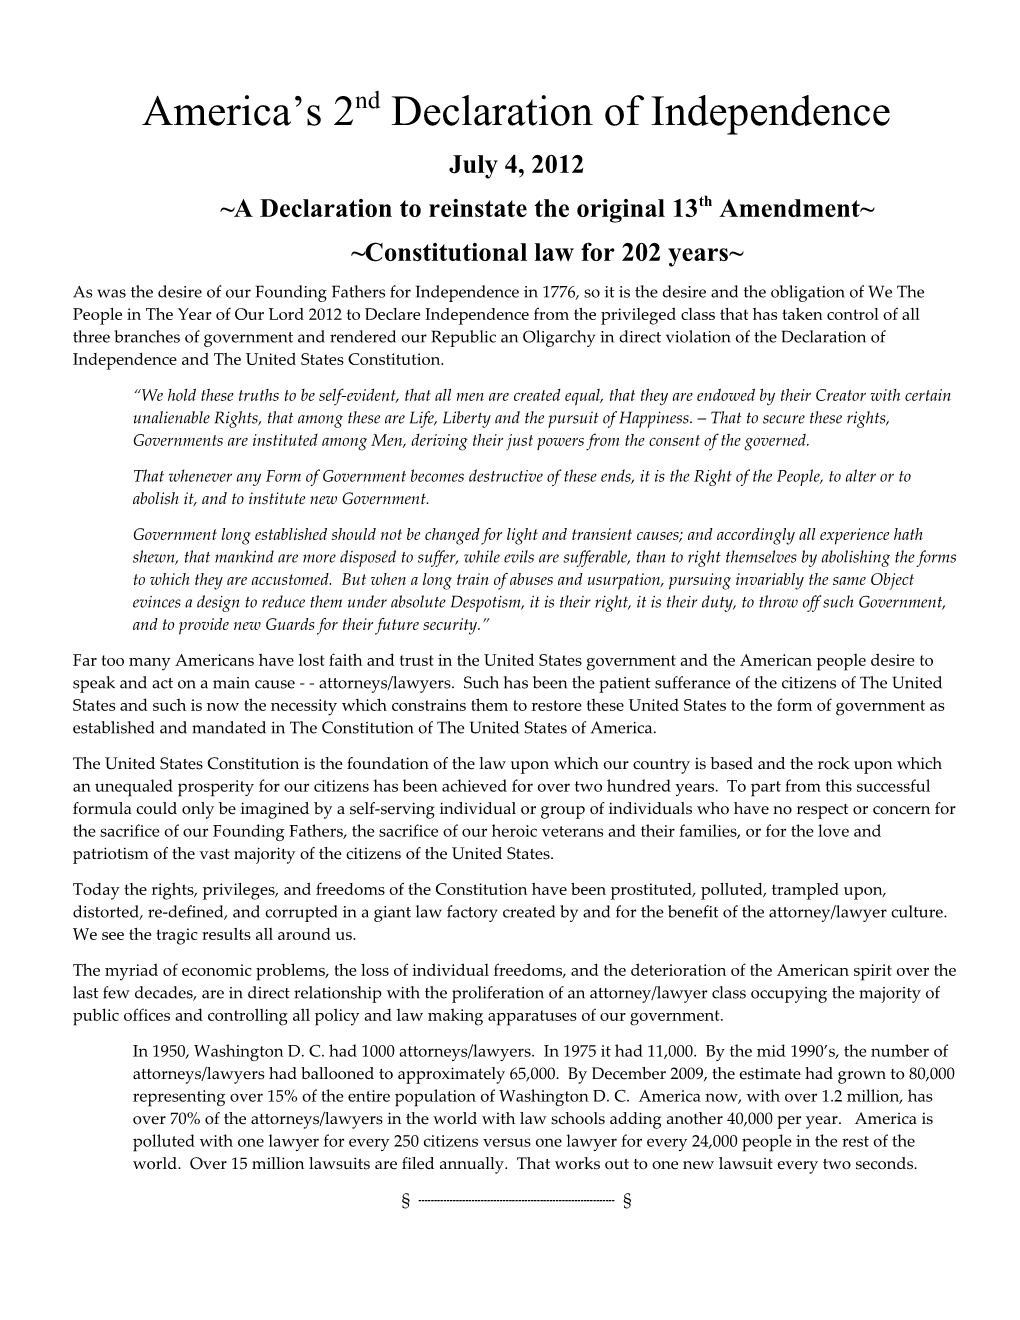 A Declaration to Reinstate the Original 13Th Amendment